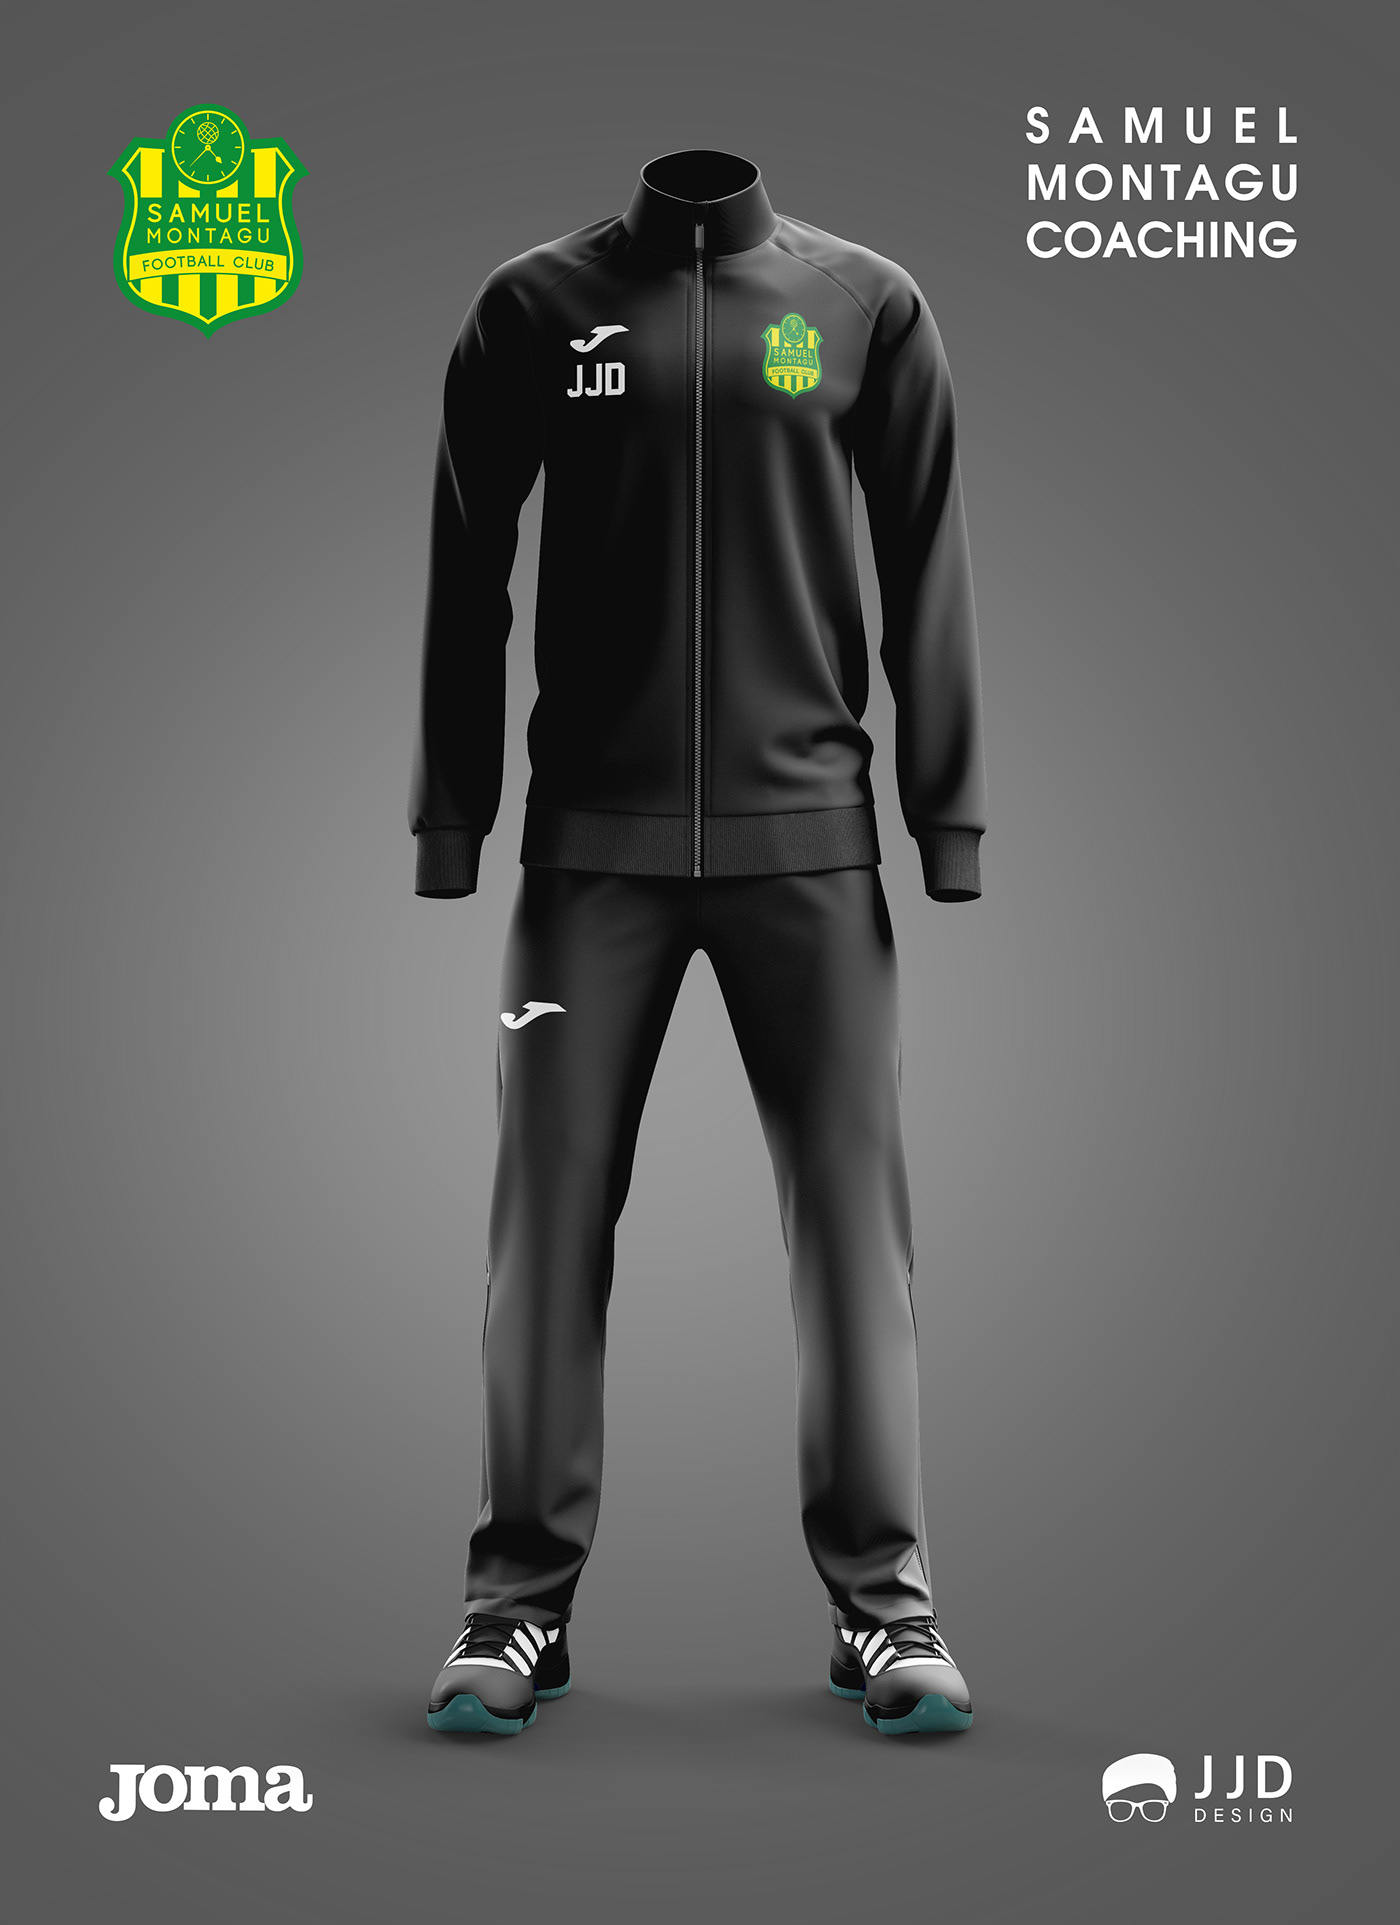 Rebrand soccer jersey soccer football soccer uniform branding  sport fashion adidas non-league Football logo